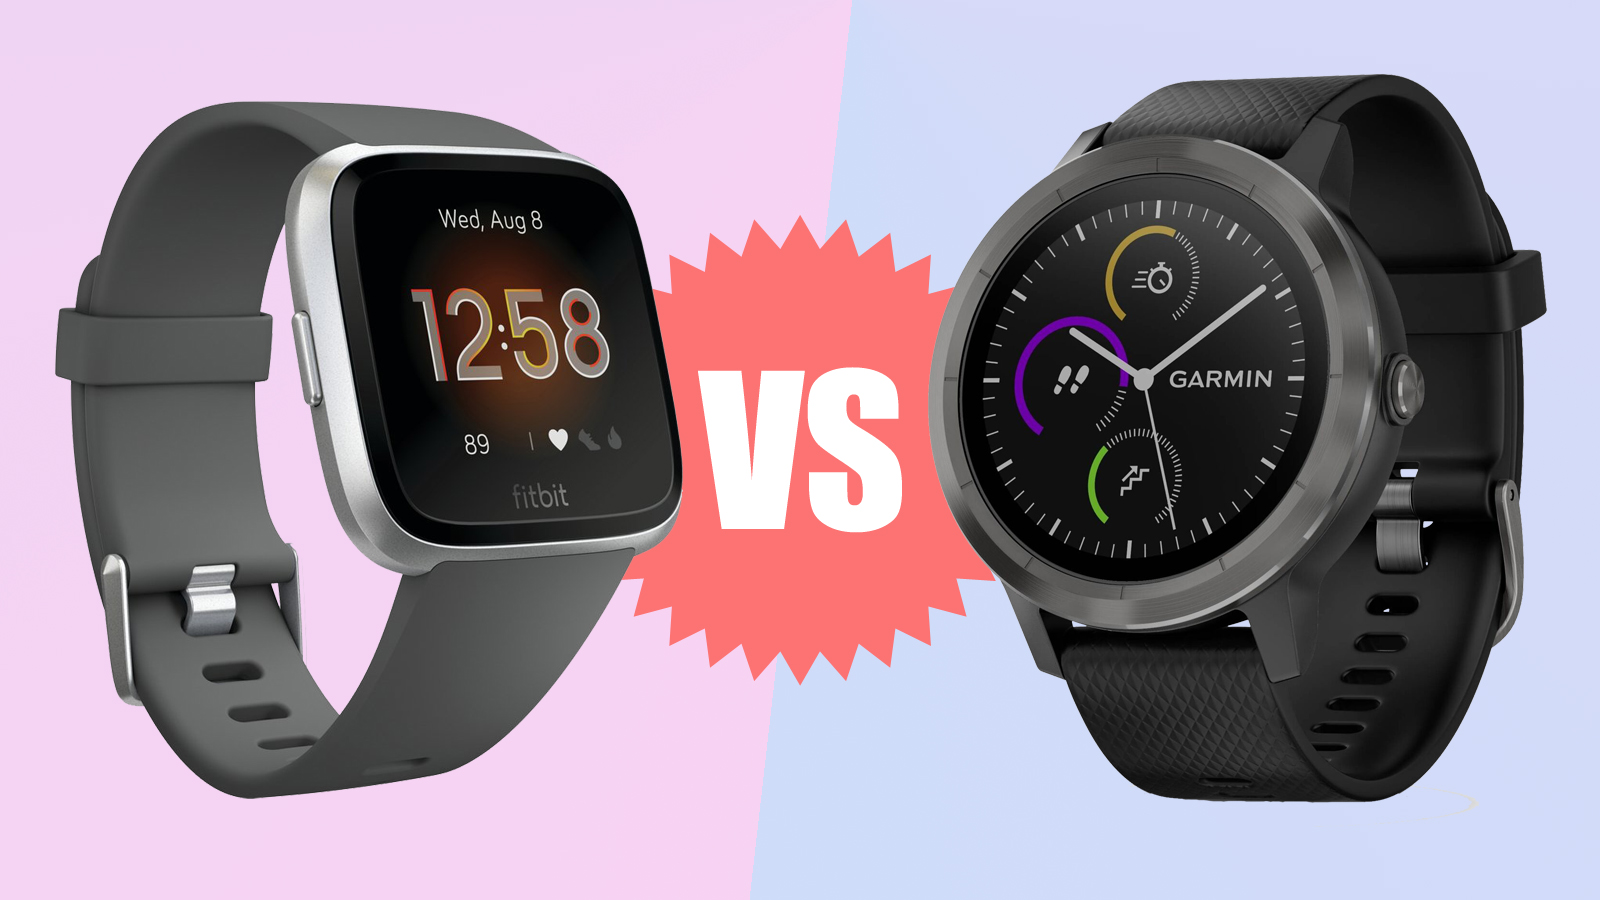 Fitbit Versa Lite vs Garmin vivoactive 3: which one is the fitness tracker? |